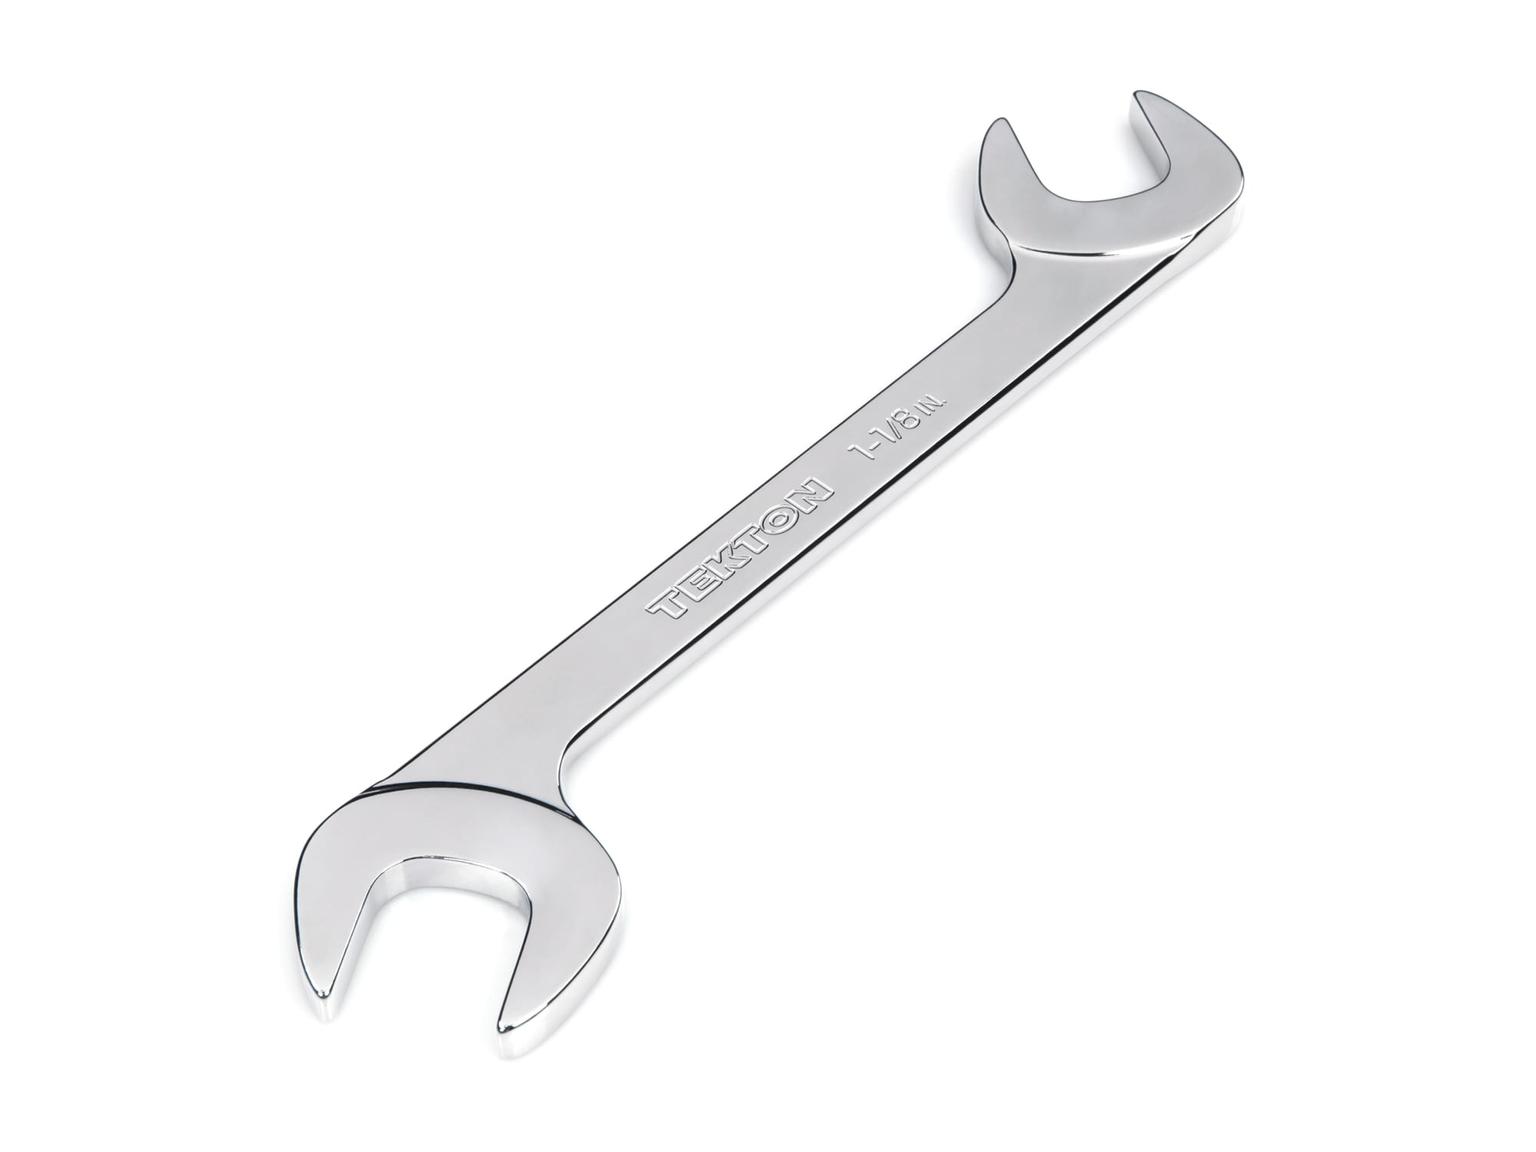 TEKTON WAE83029-T 1-1/8 Inch Angle Head Open End Wrench